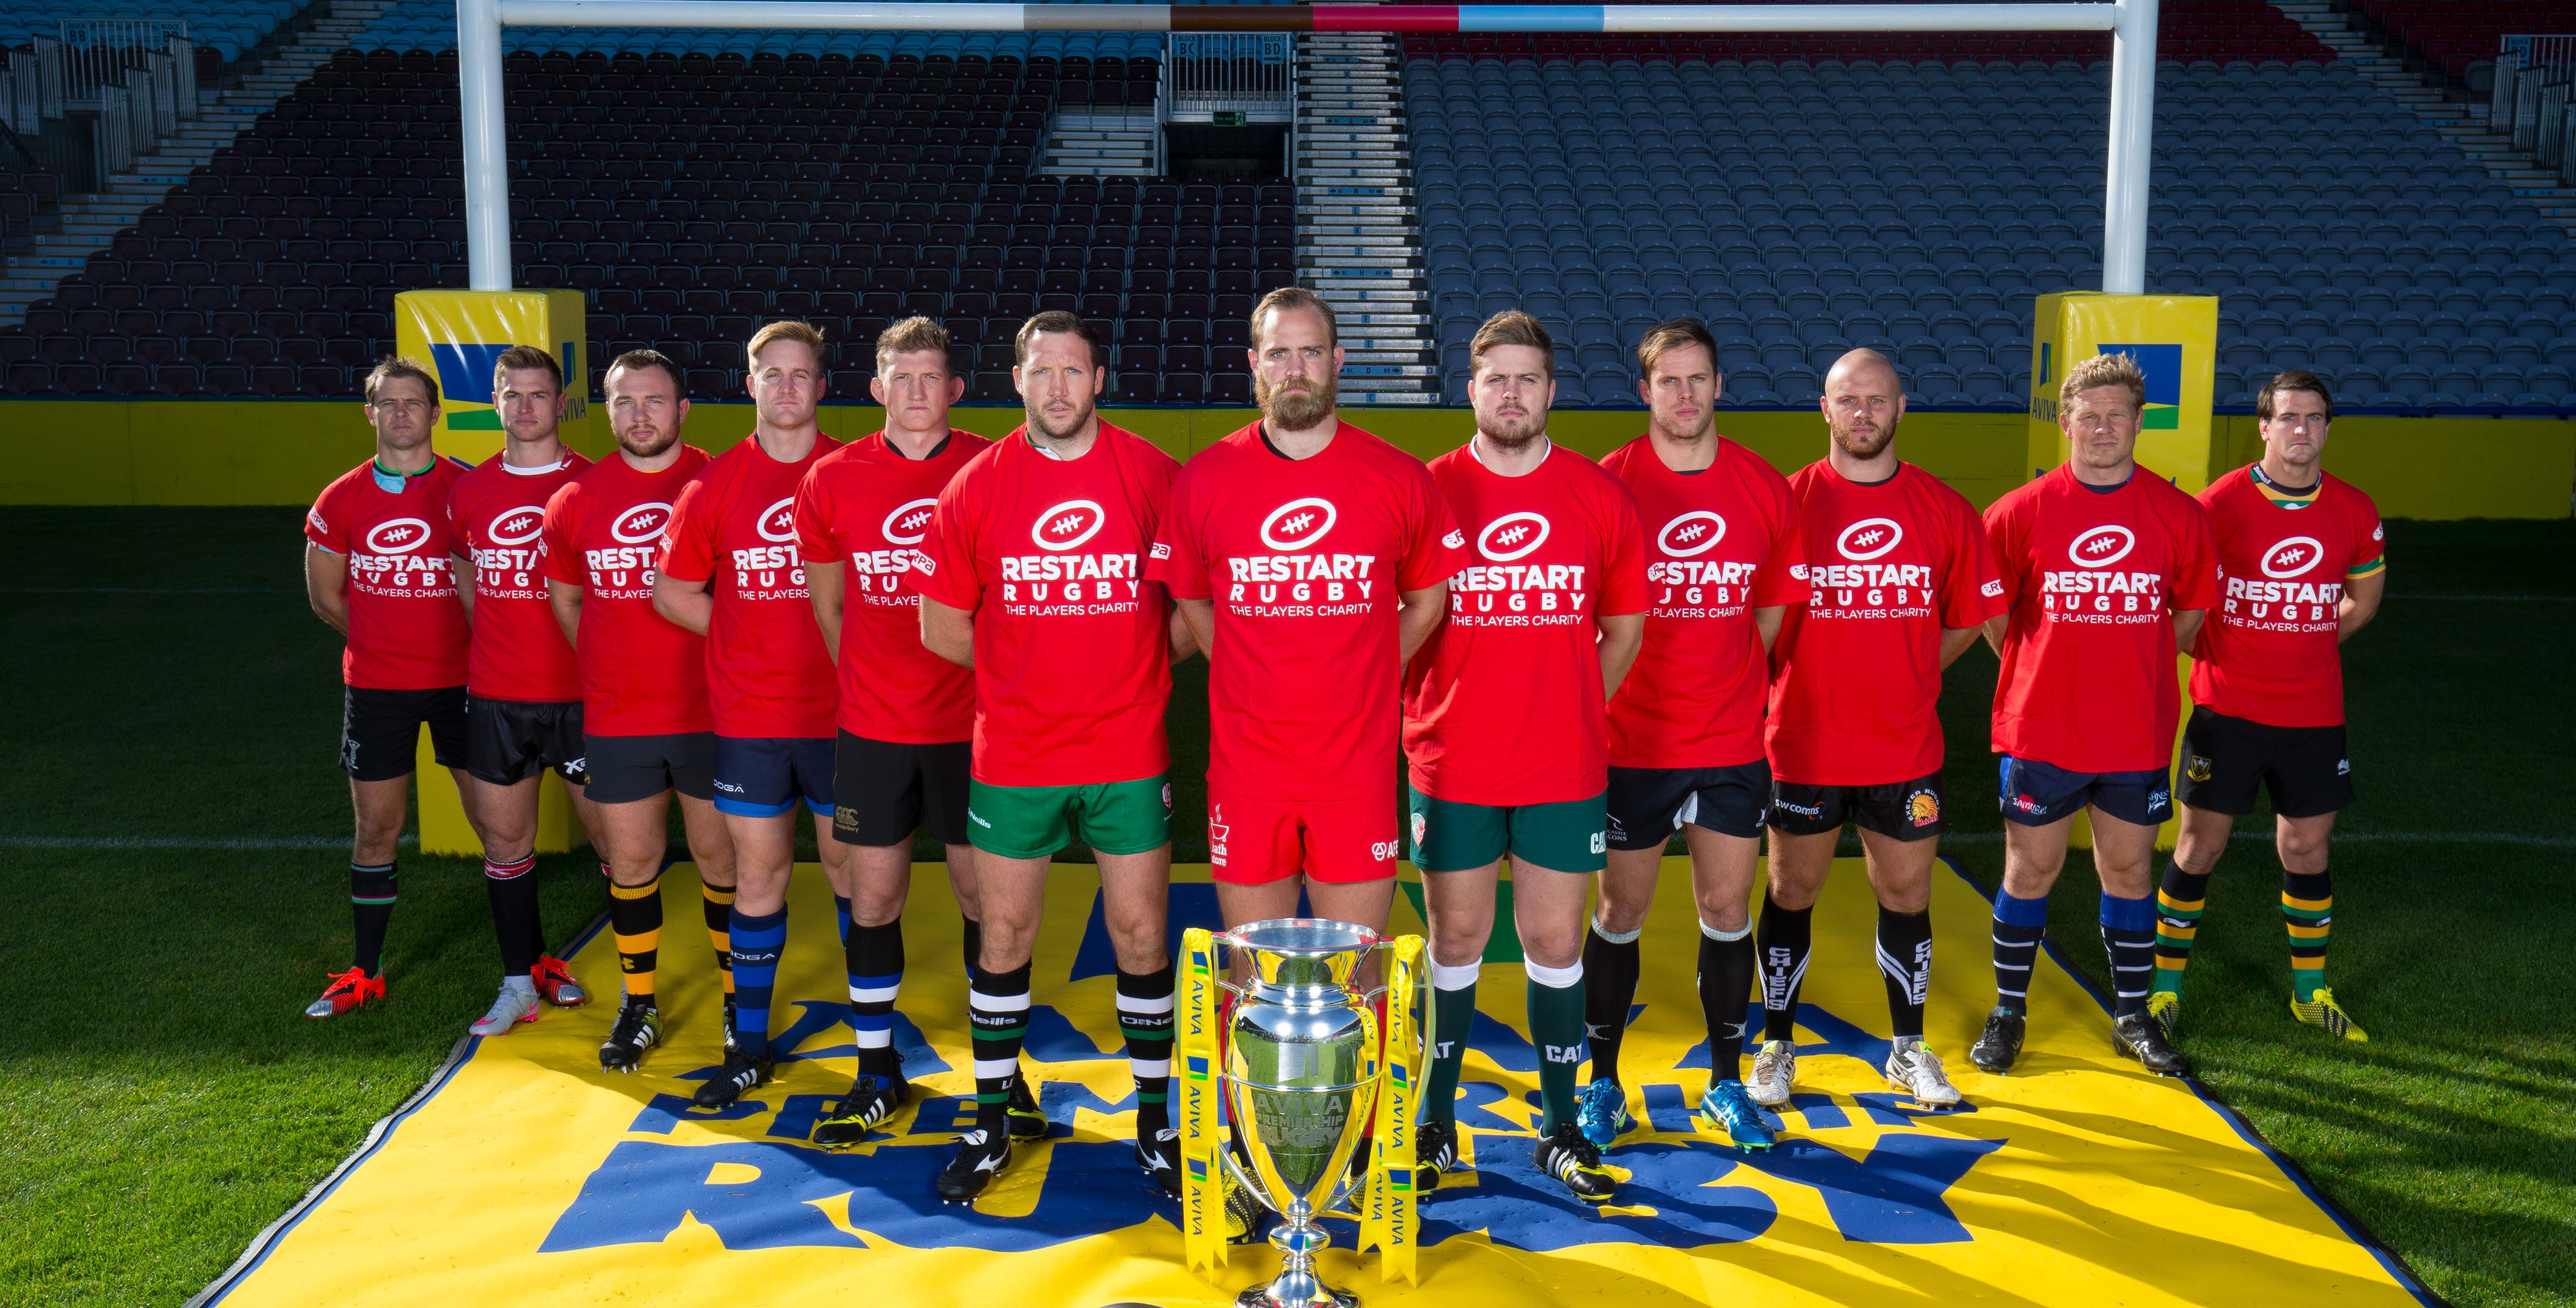 Restart Rugby Weekend NEEDS YOU! – Worcester Warriors